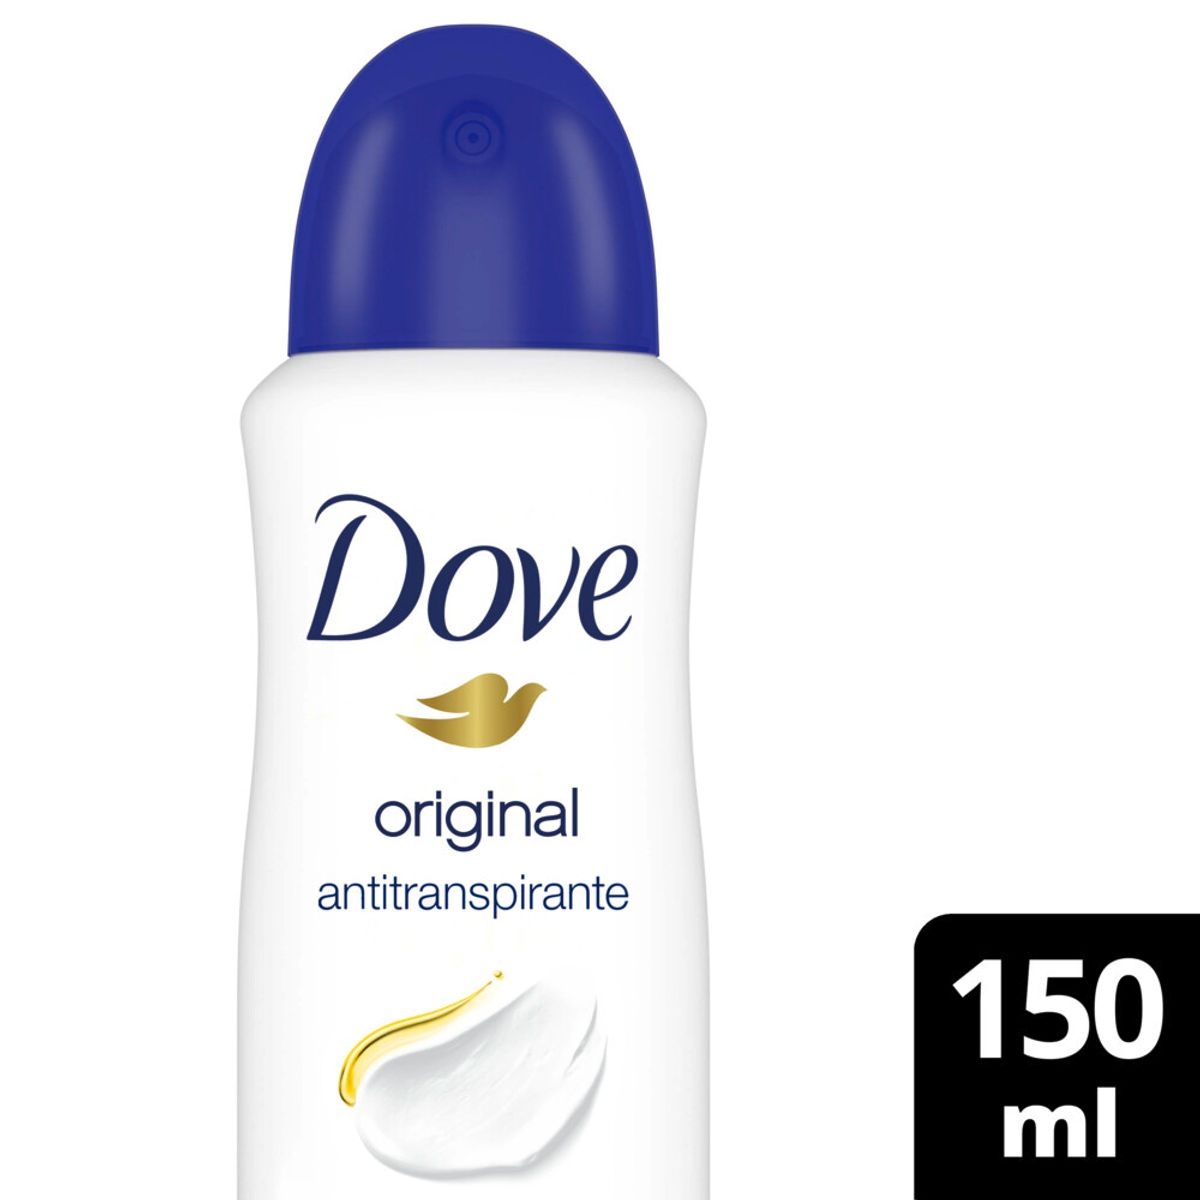 Desodorante Rexona Feminino Powder Dry Aerossol 150ml - Promofarma